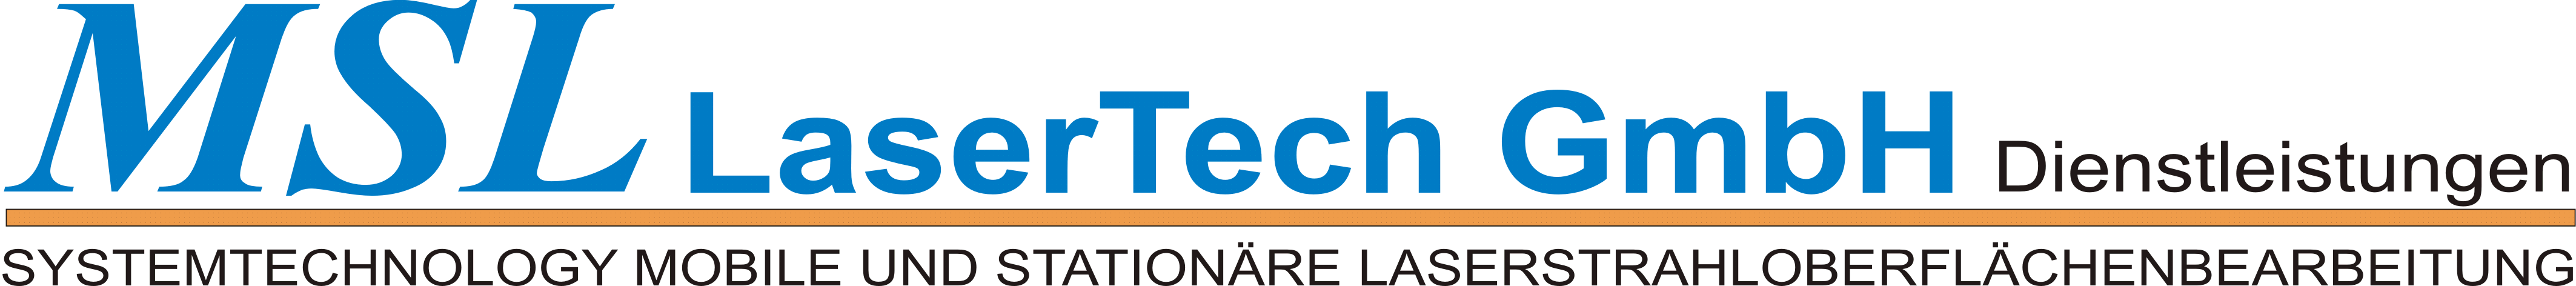 MSL LaserTech GmbH Logo